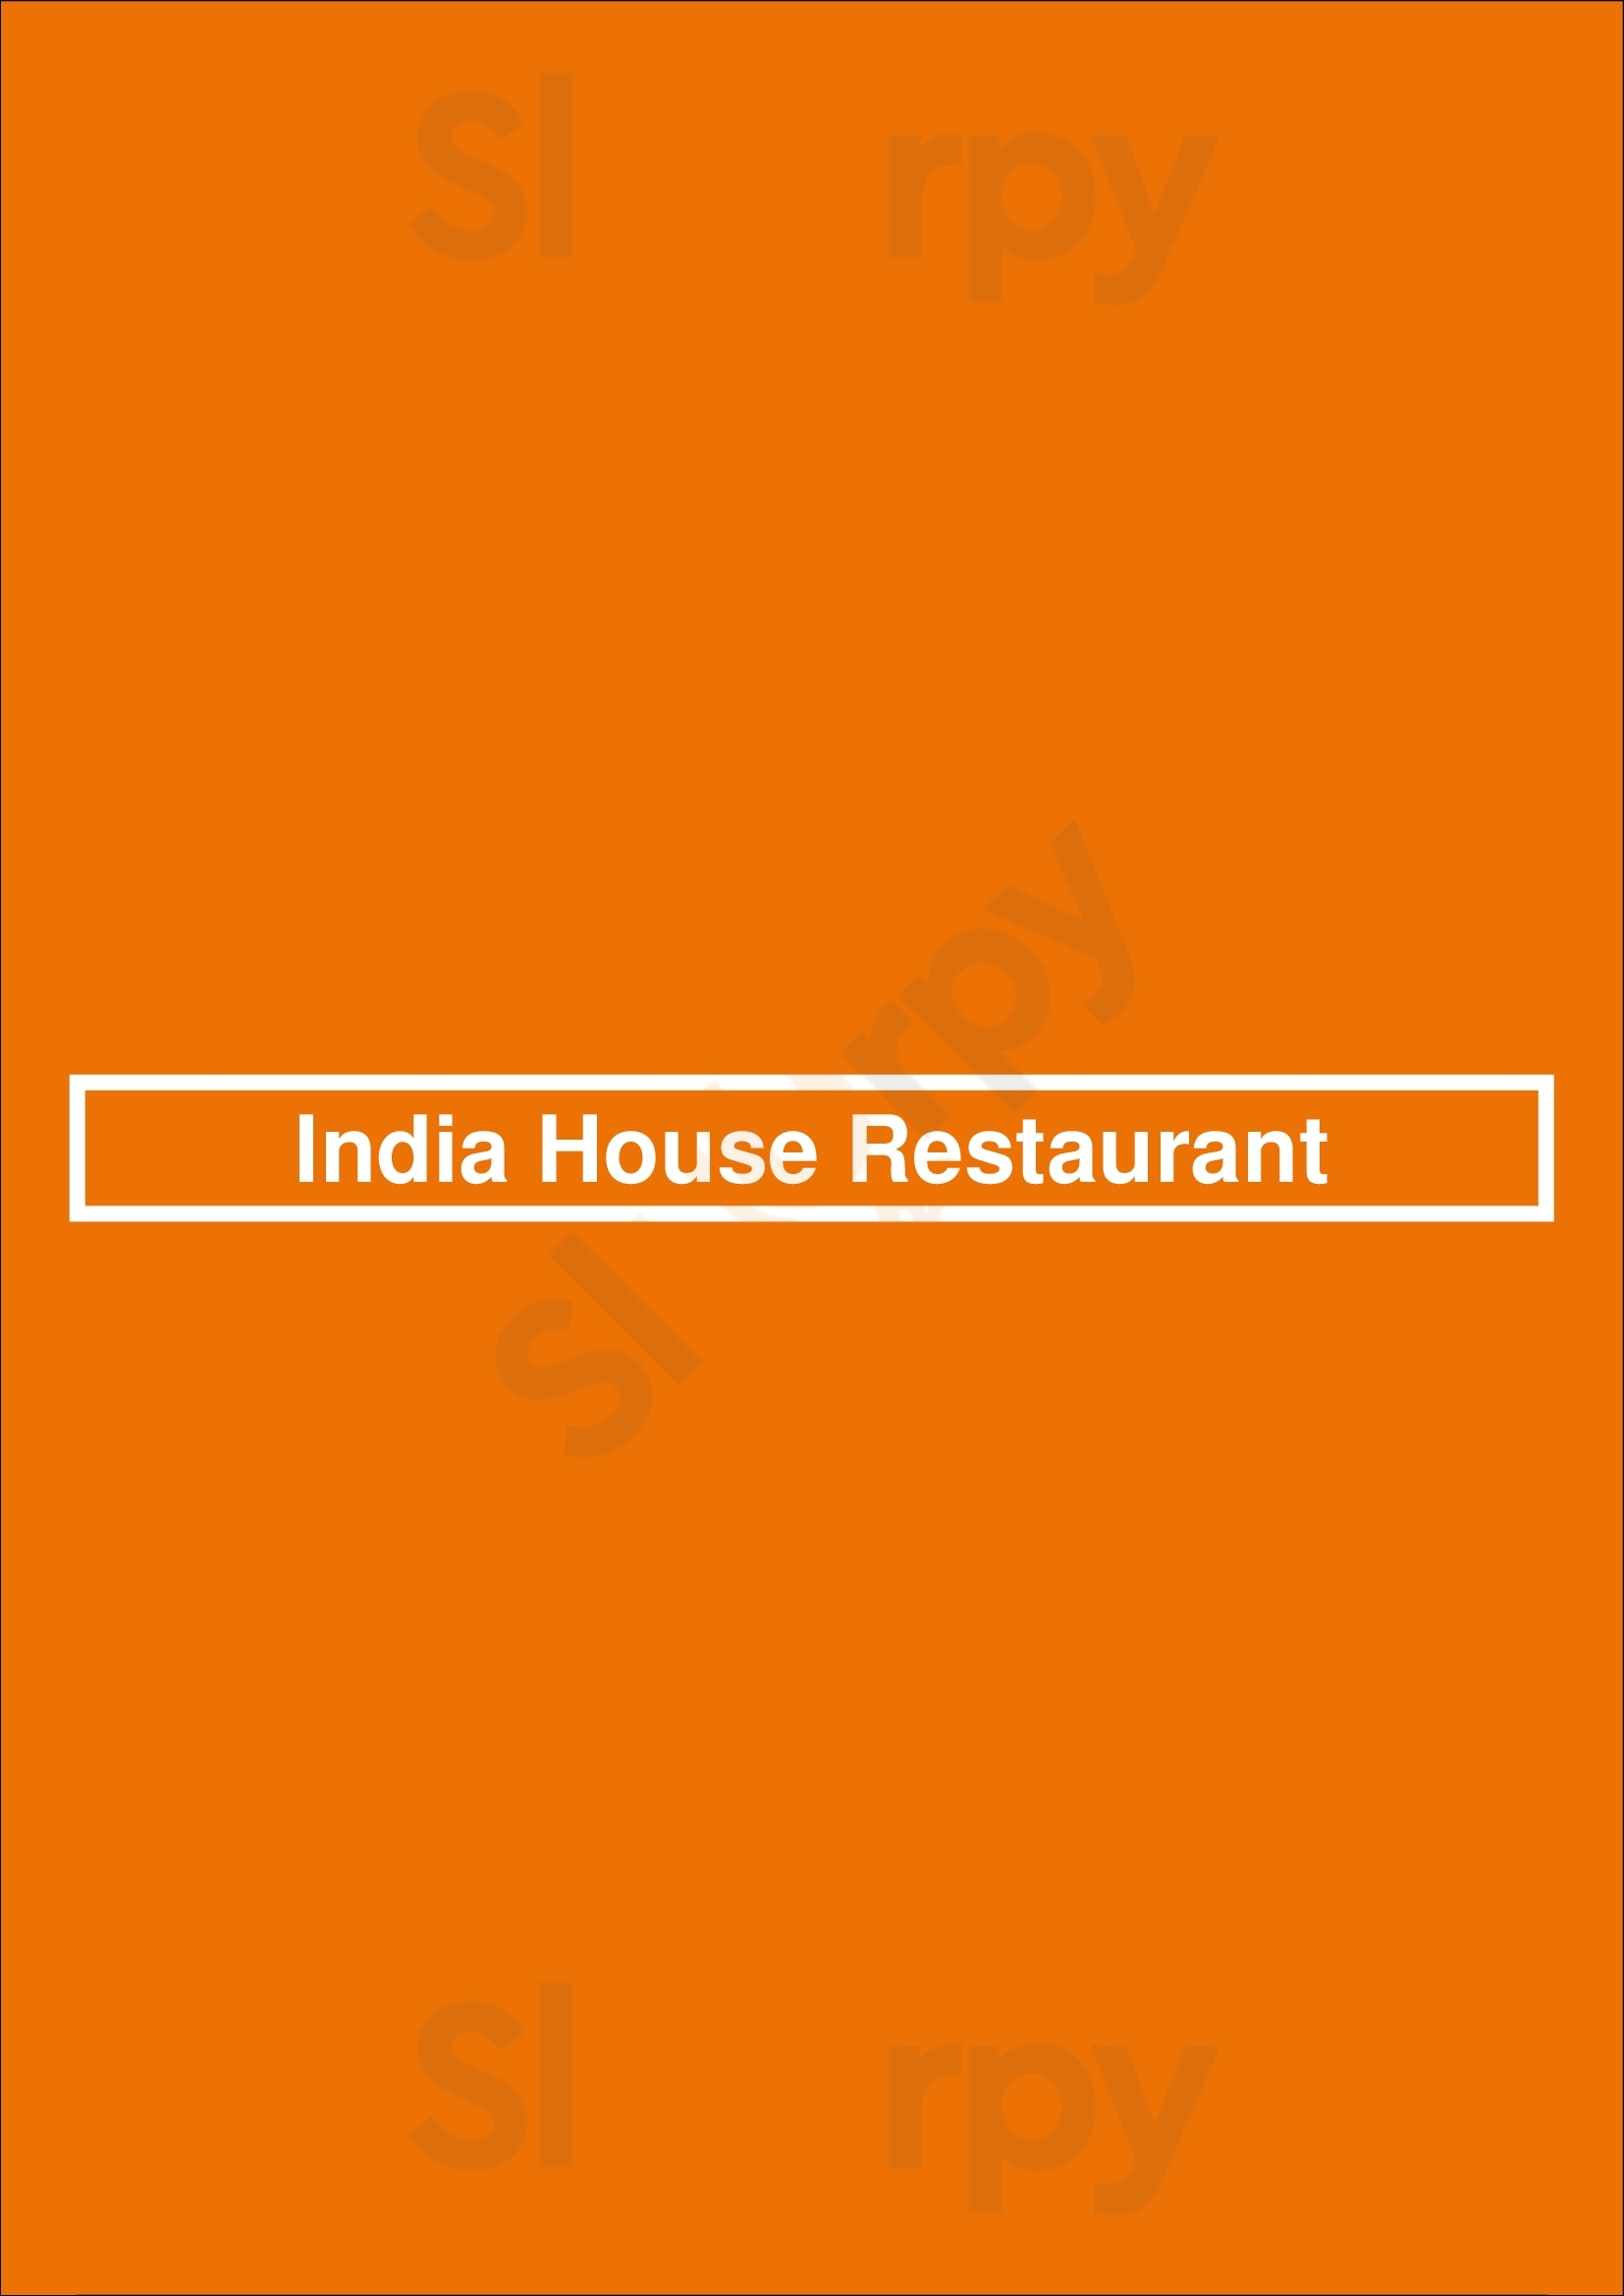 India House Restaurant Funchal Menu - 1